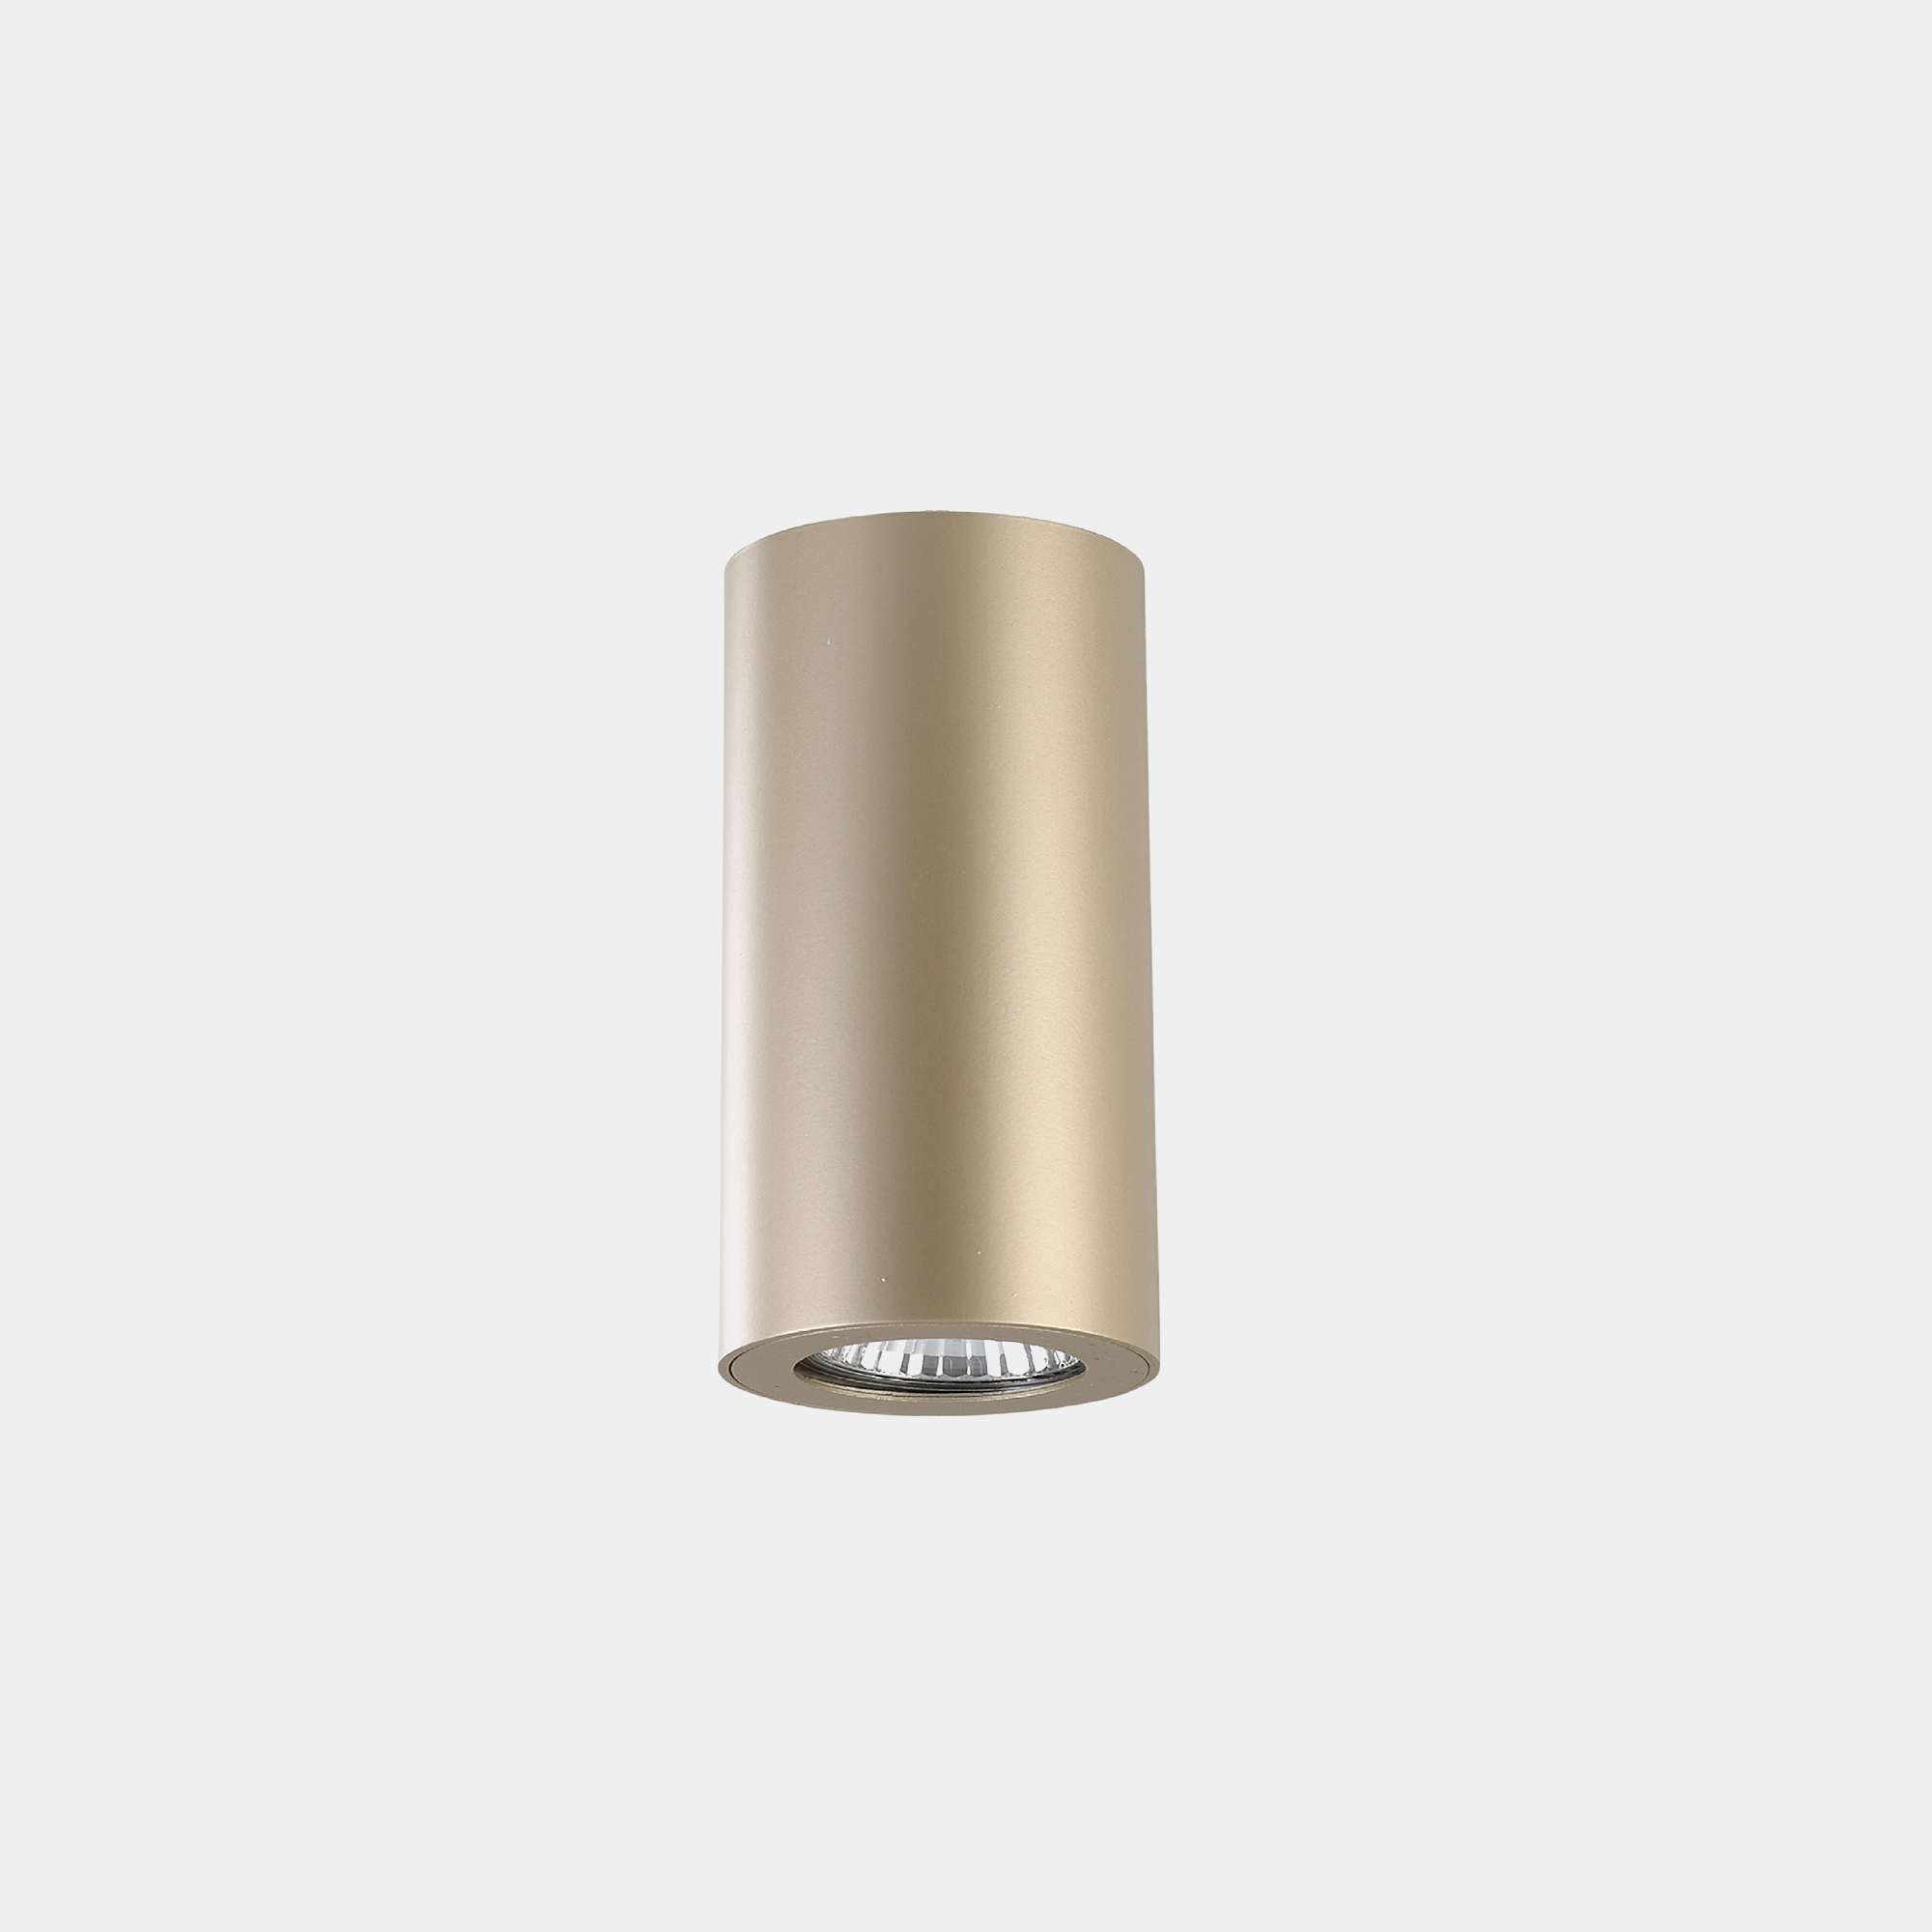 LEDS C4 Pipe Ceiling Light| Image:1